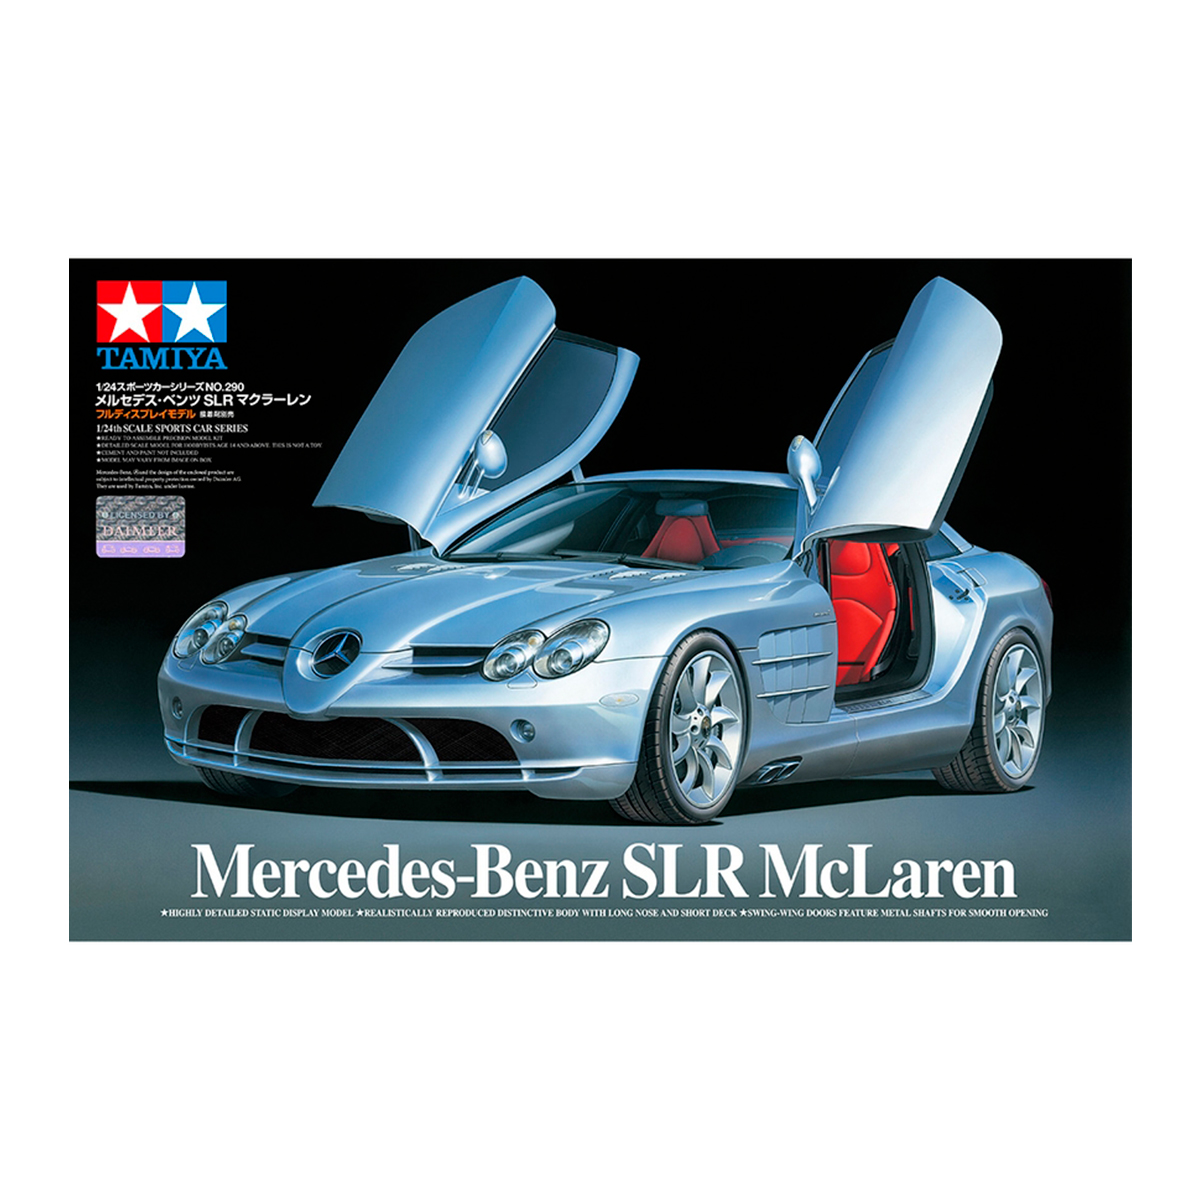 1/24 Mercedes-Benz SLR McLaren